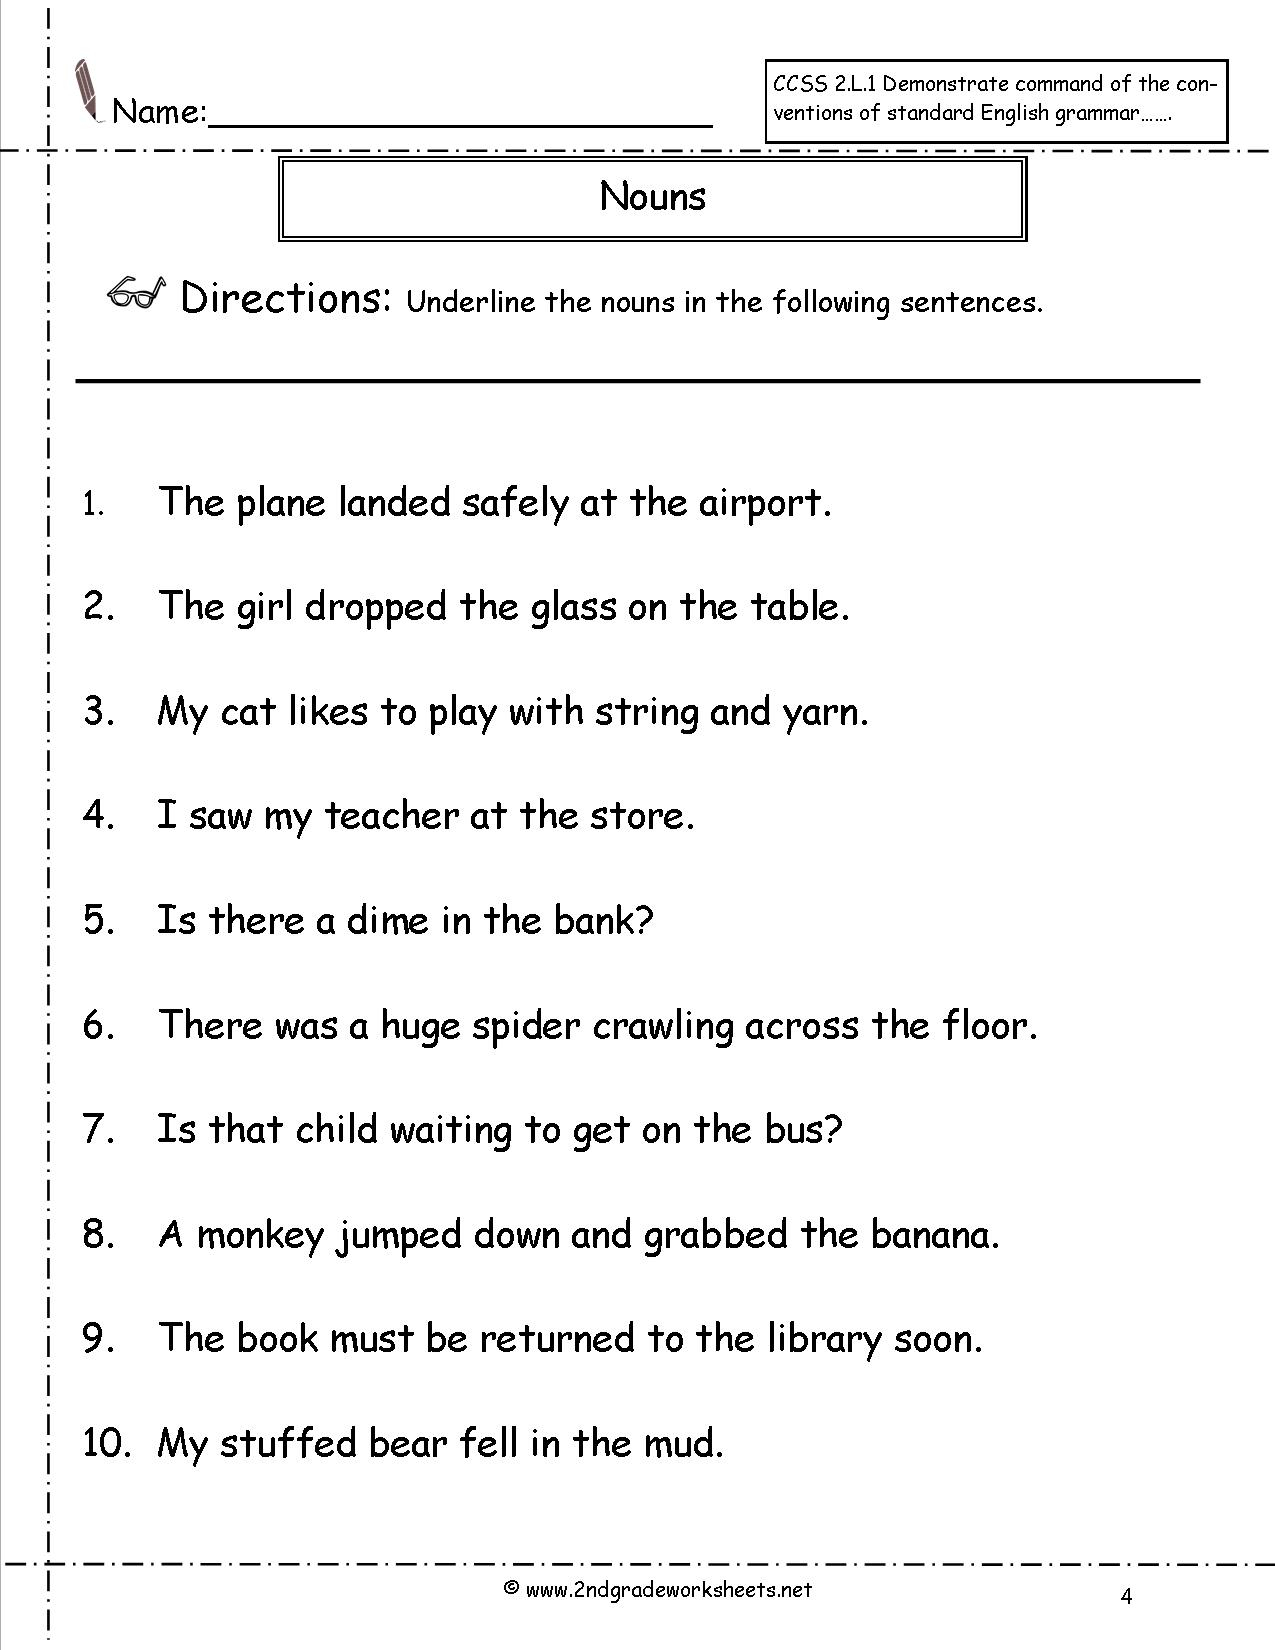 Nouns Worksheets And Printouts - Free Printable Pronoun Worksheets For 2Nd Grade